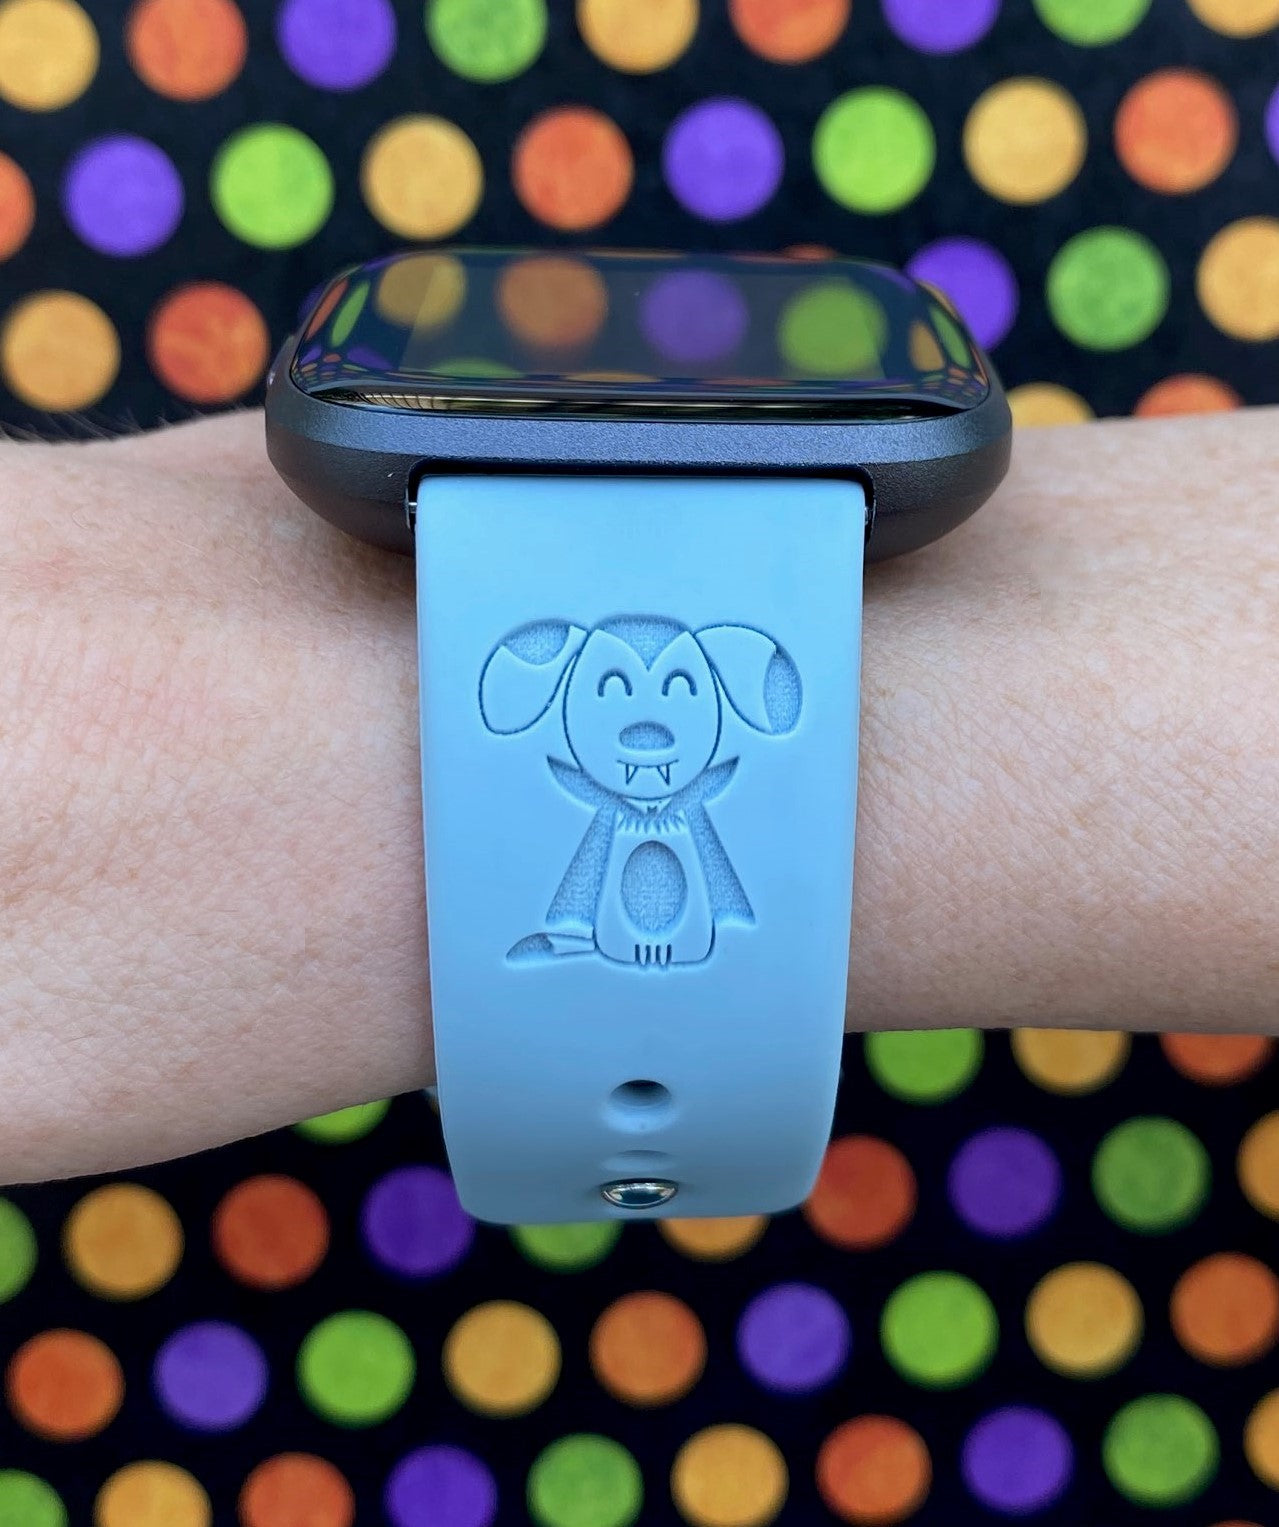 Halloween Dog Fitbit Versa 1/2 Watch Band